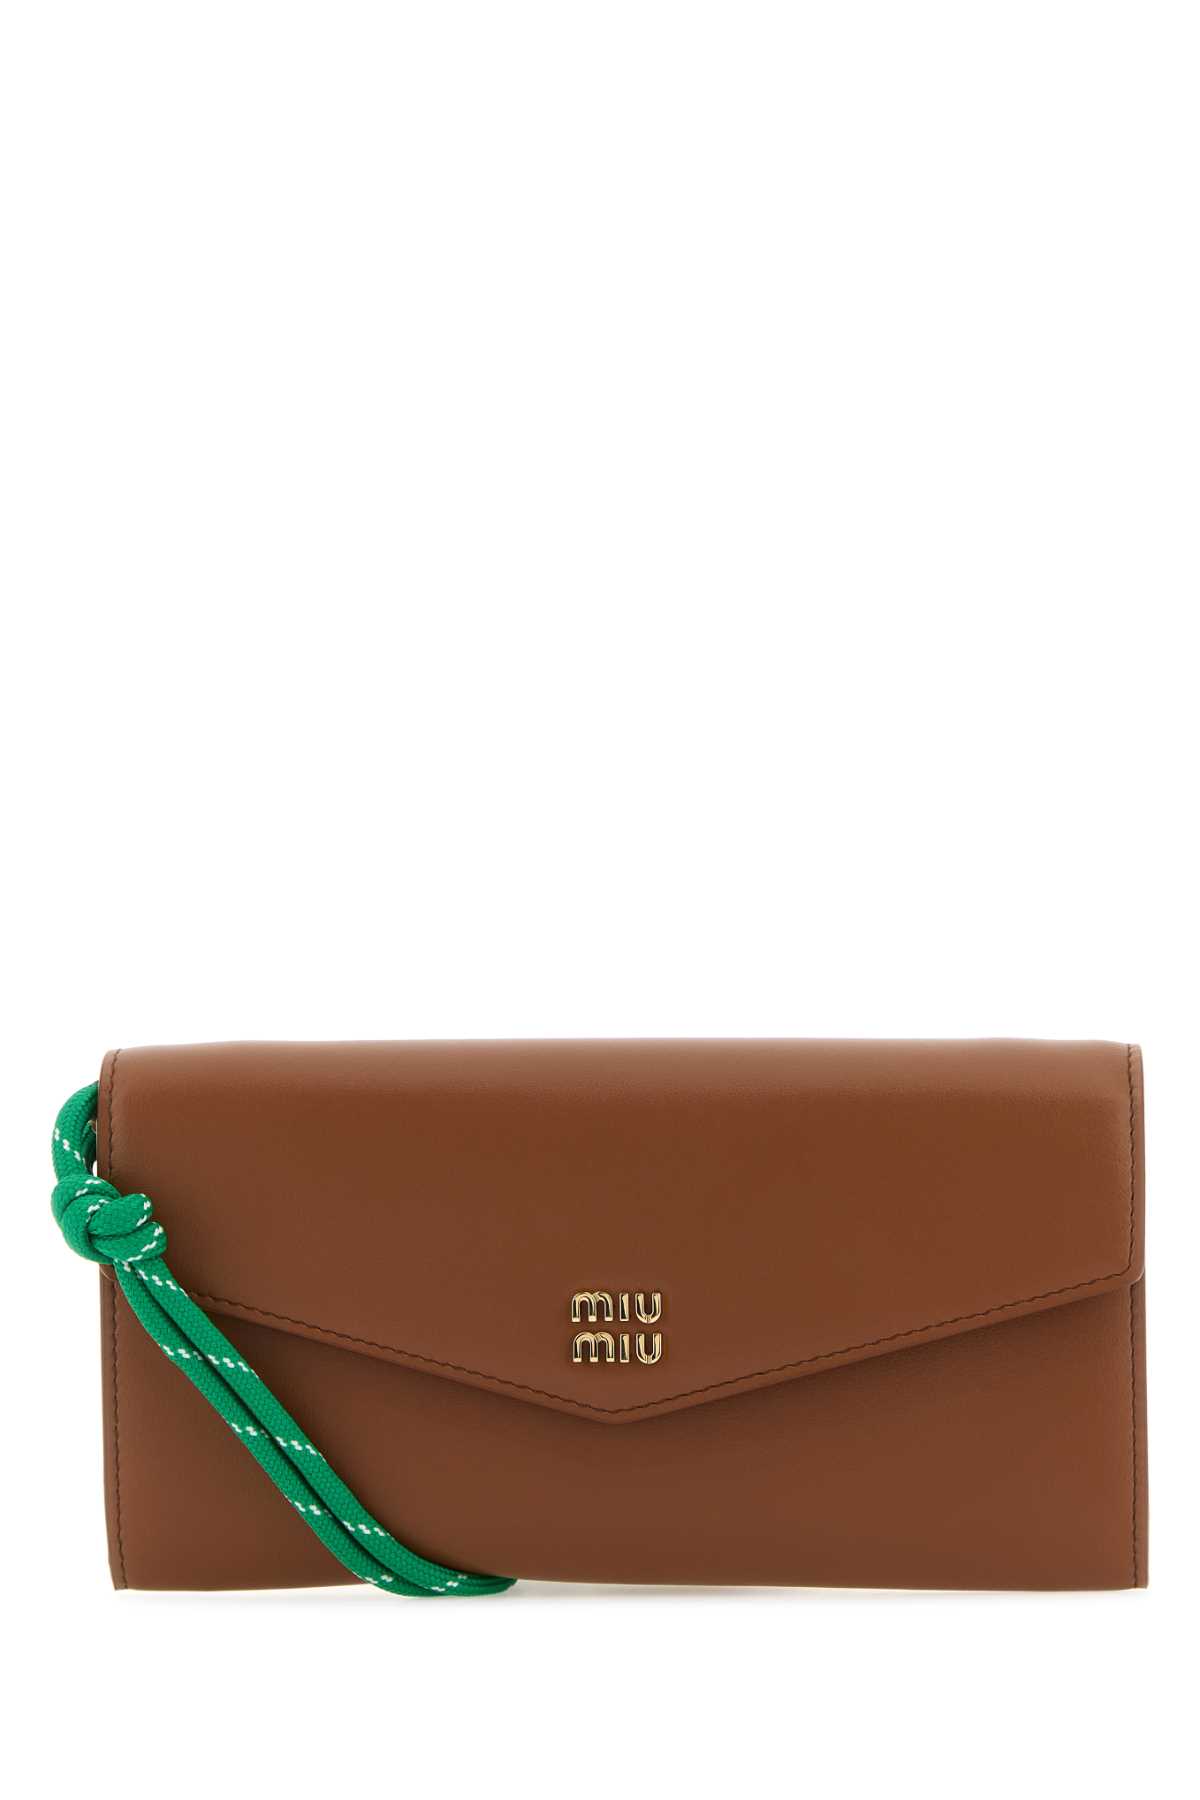 Miu Miu Caramel Leather Wallet In Cognacsmeraldo